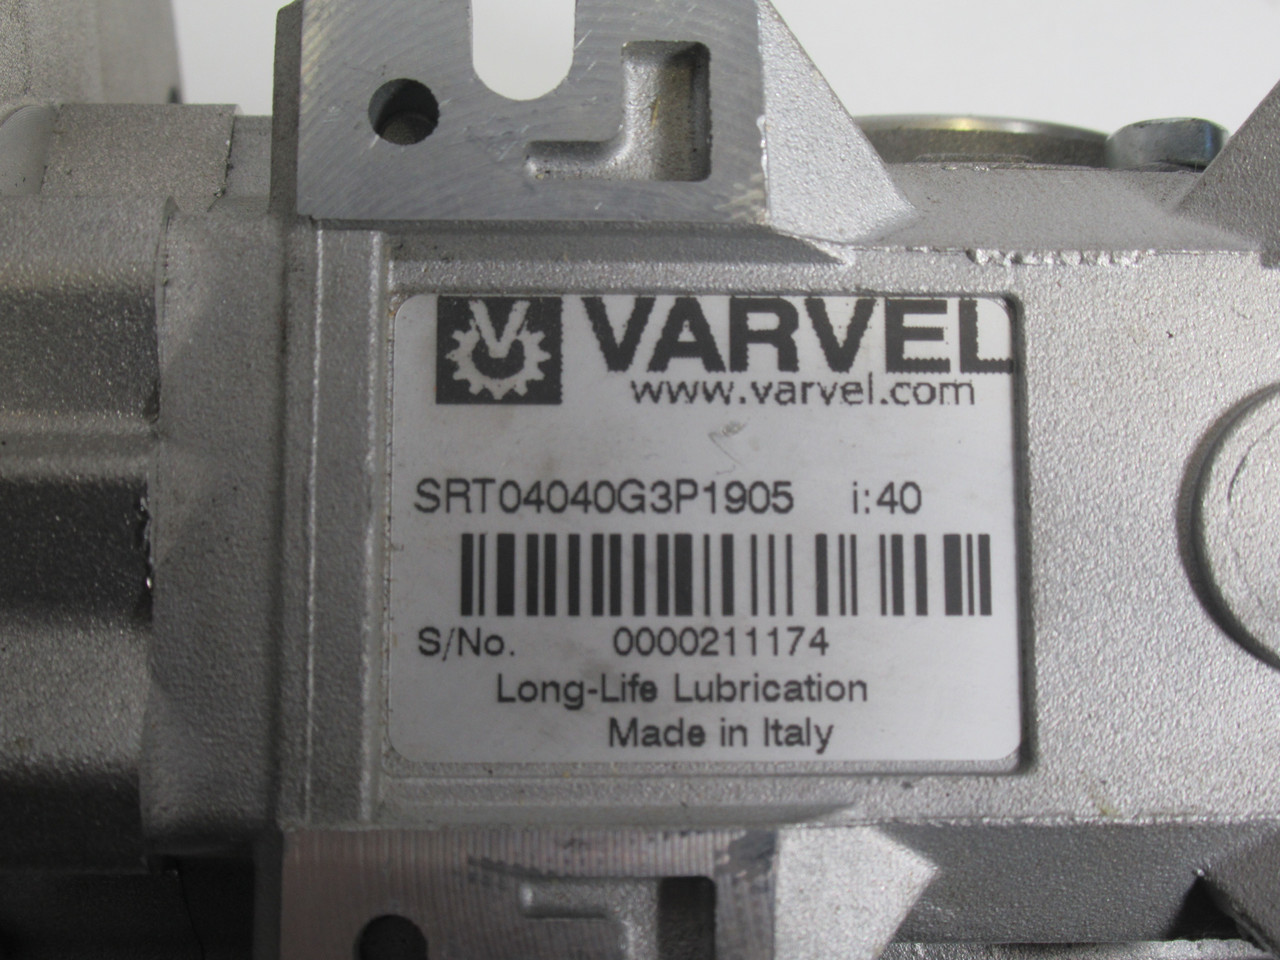 Varvel SRT04040G3P1905 Gear Reducer 40:1 Ratio USED